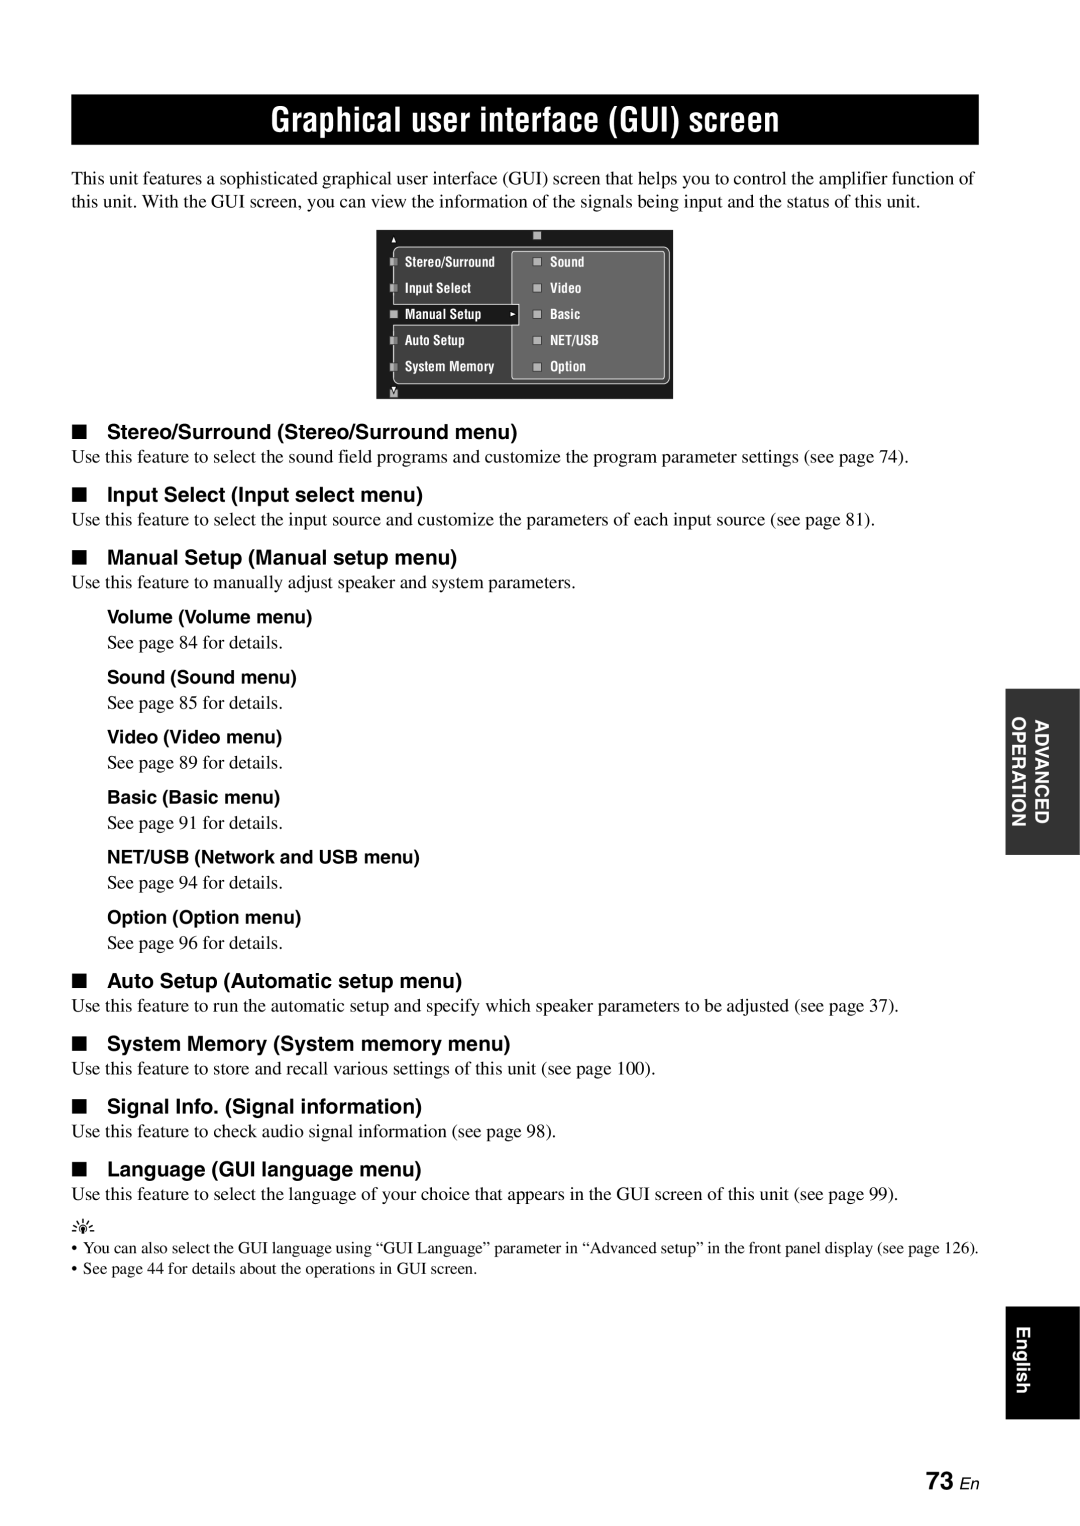 Yamaha RX-V3800 Graphical user interface GUI screen, 73 En, Stereo/Surround Stereo/Surround menu, Volume Volume menu 